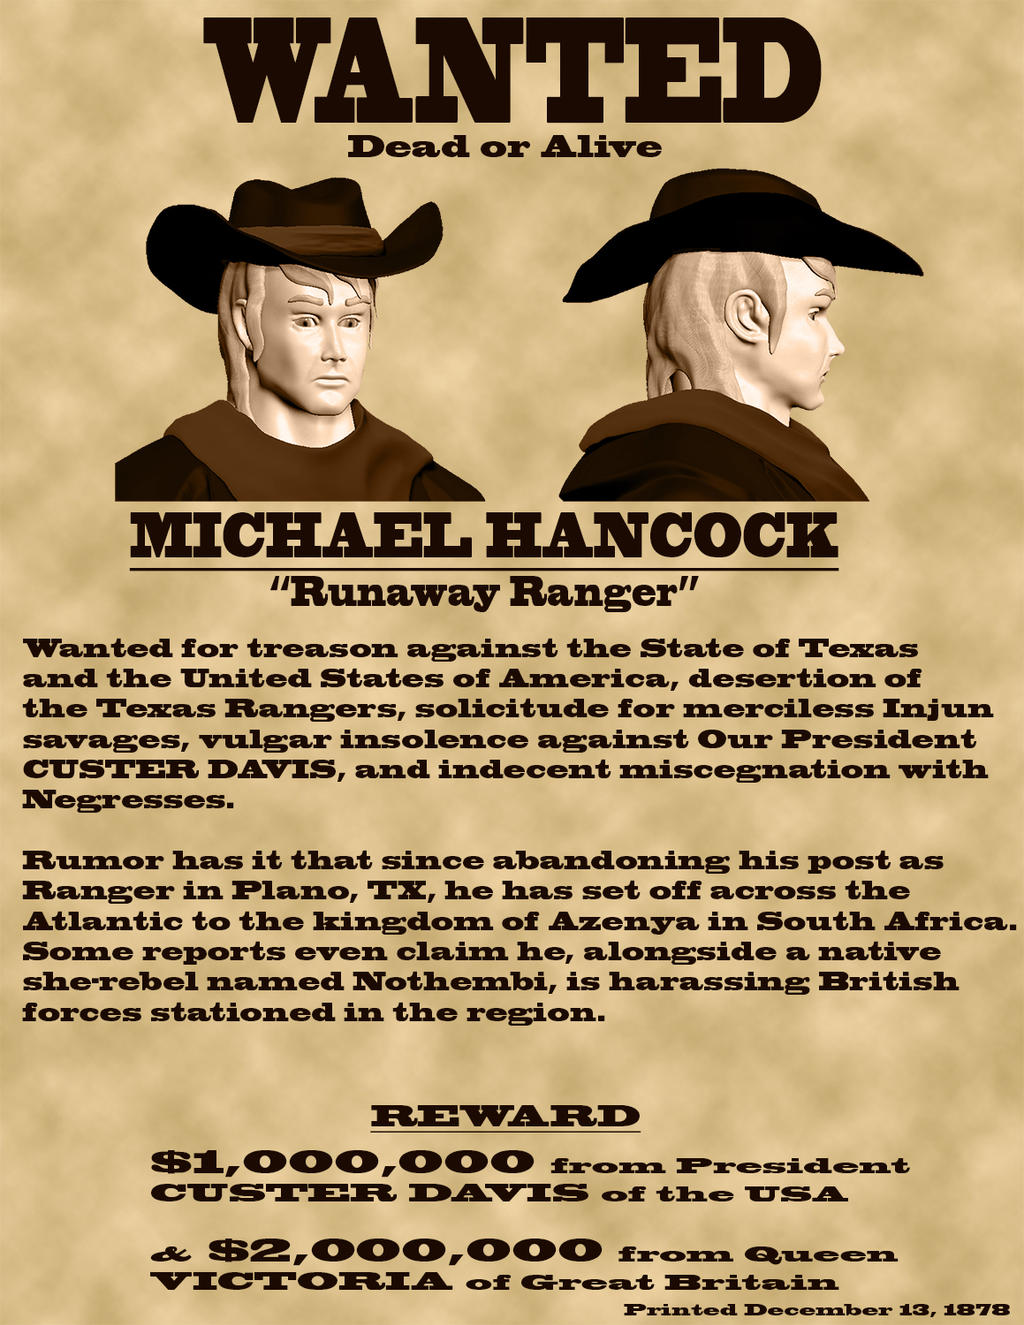 reward_for_mick_hancock_by_brandonspilcher-d8ss6t4.jpg